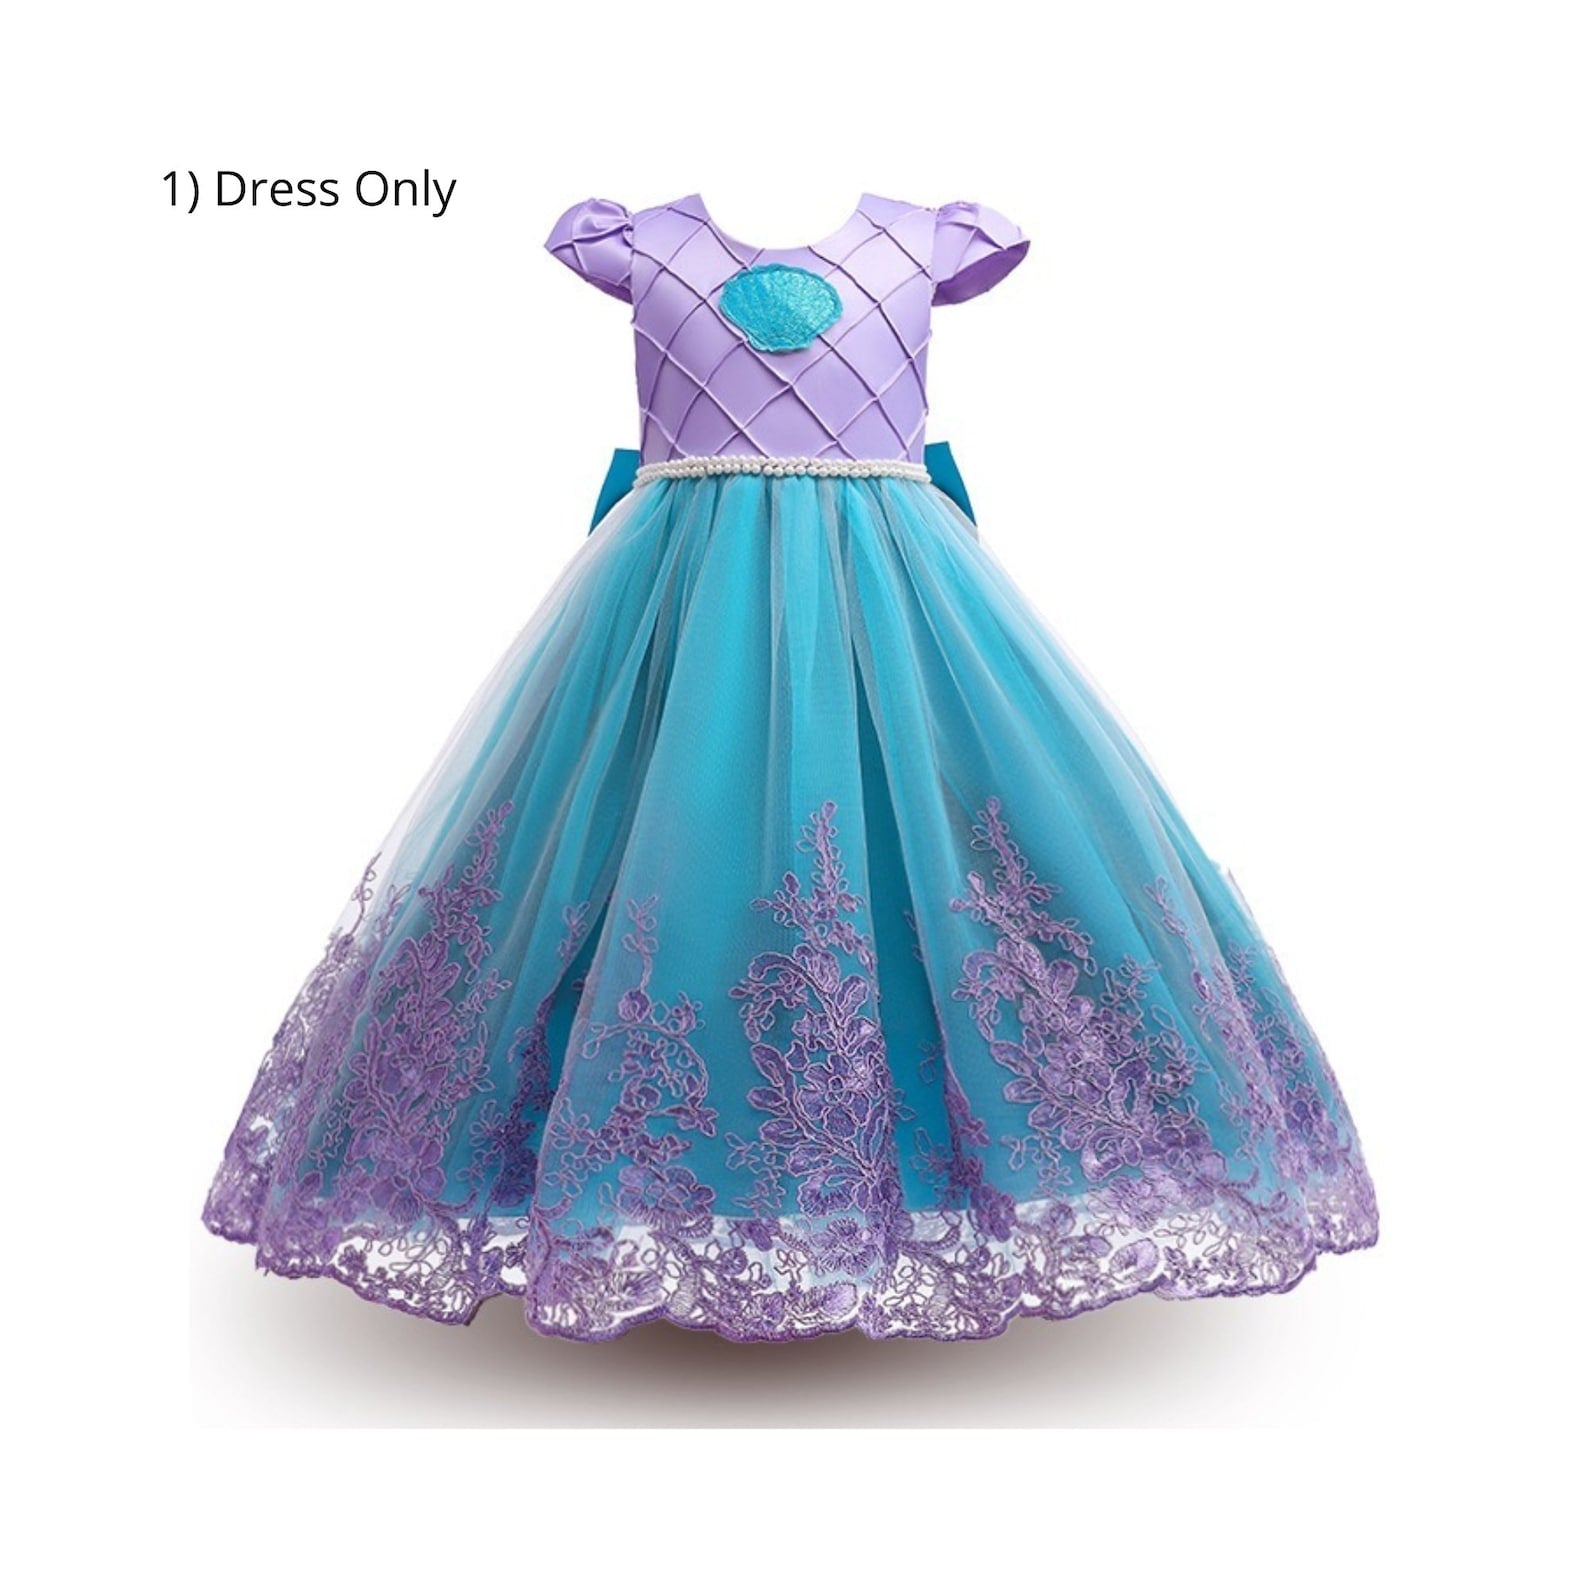 Little Mermaid Ariel dress - The ultimate Disney Inspired Costume Dress Only